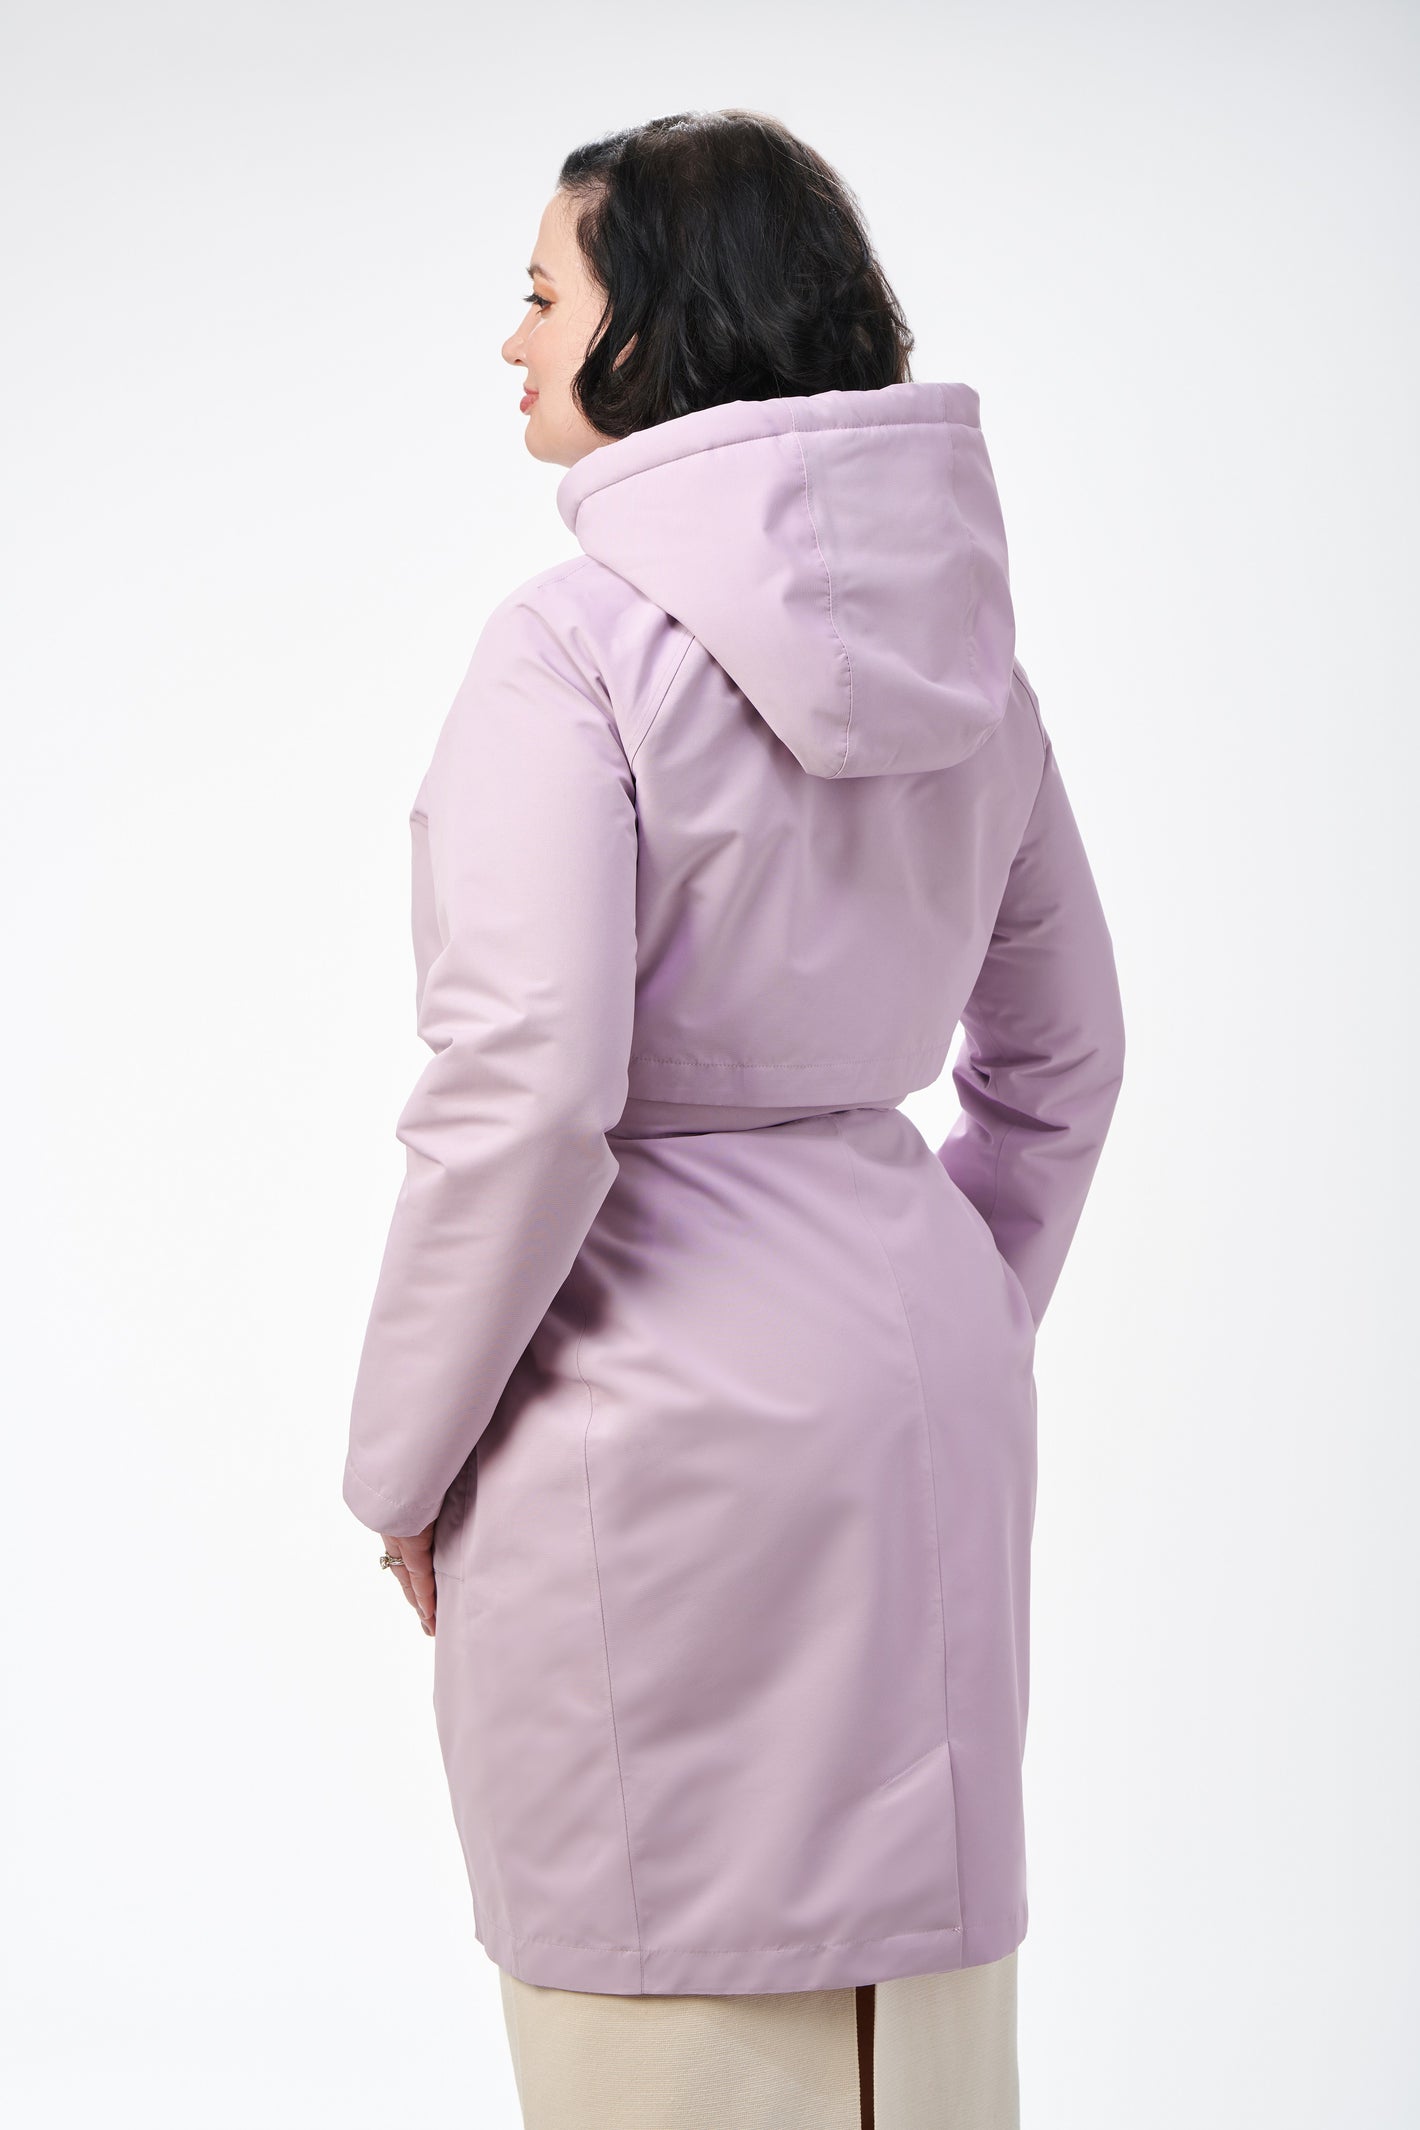 Lavender Raincoat with Hood